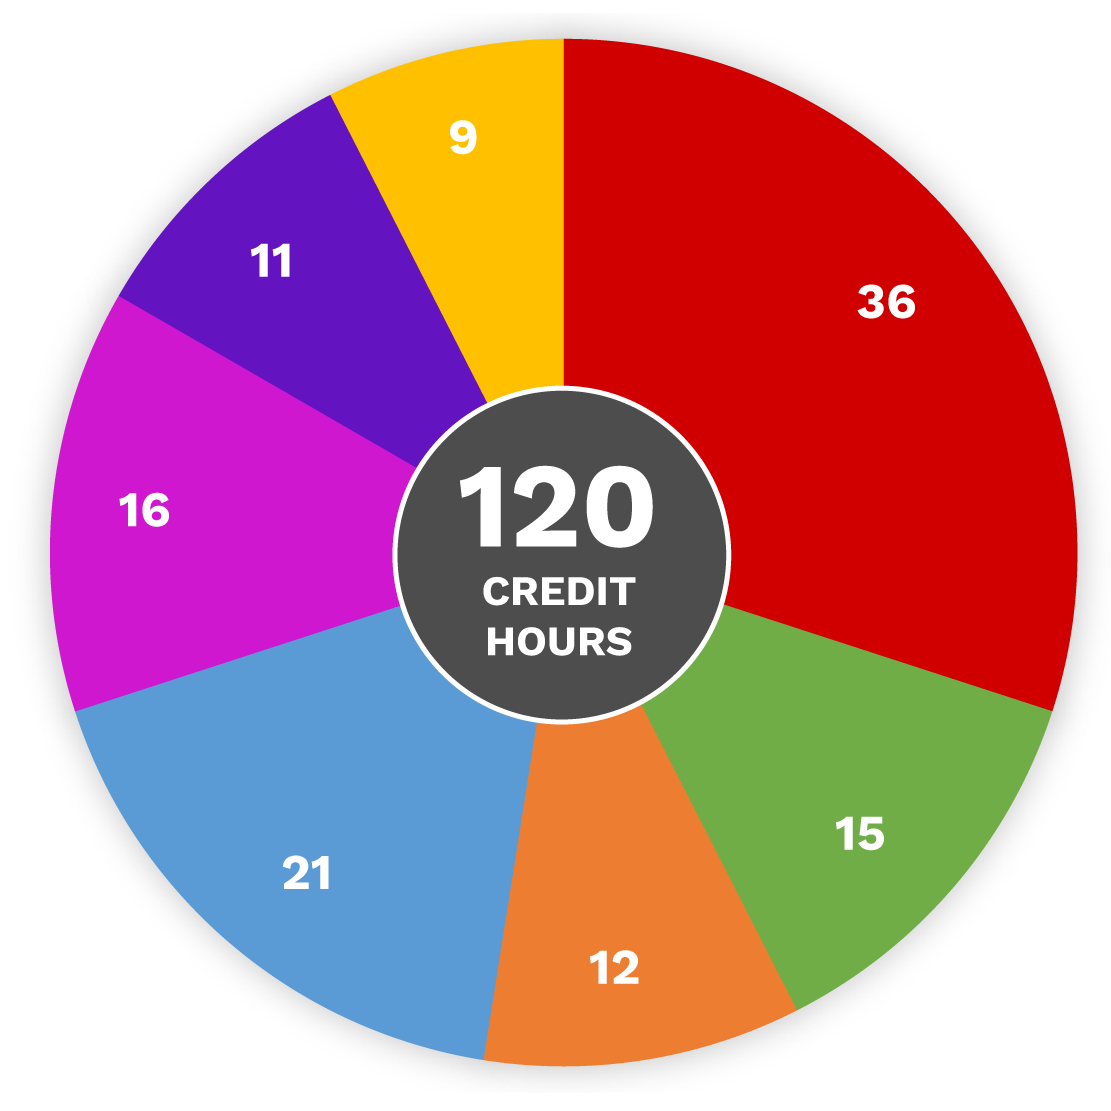 Computer Science Credit Hours Per Major Circle Graph